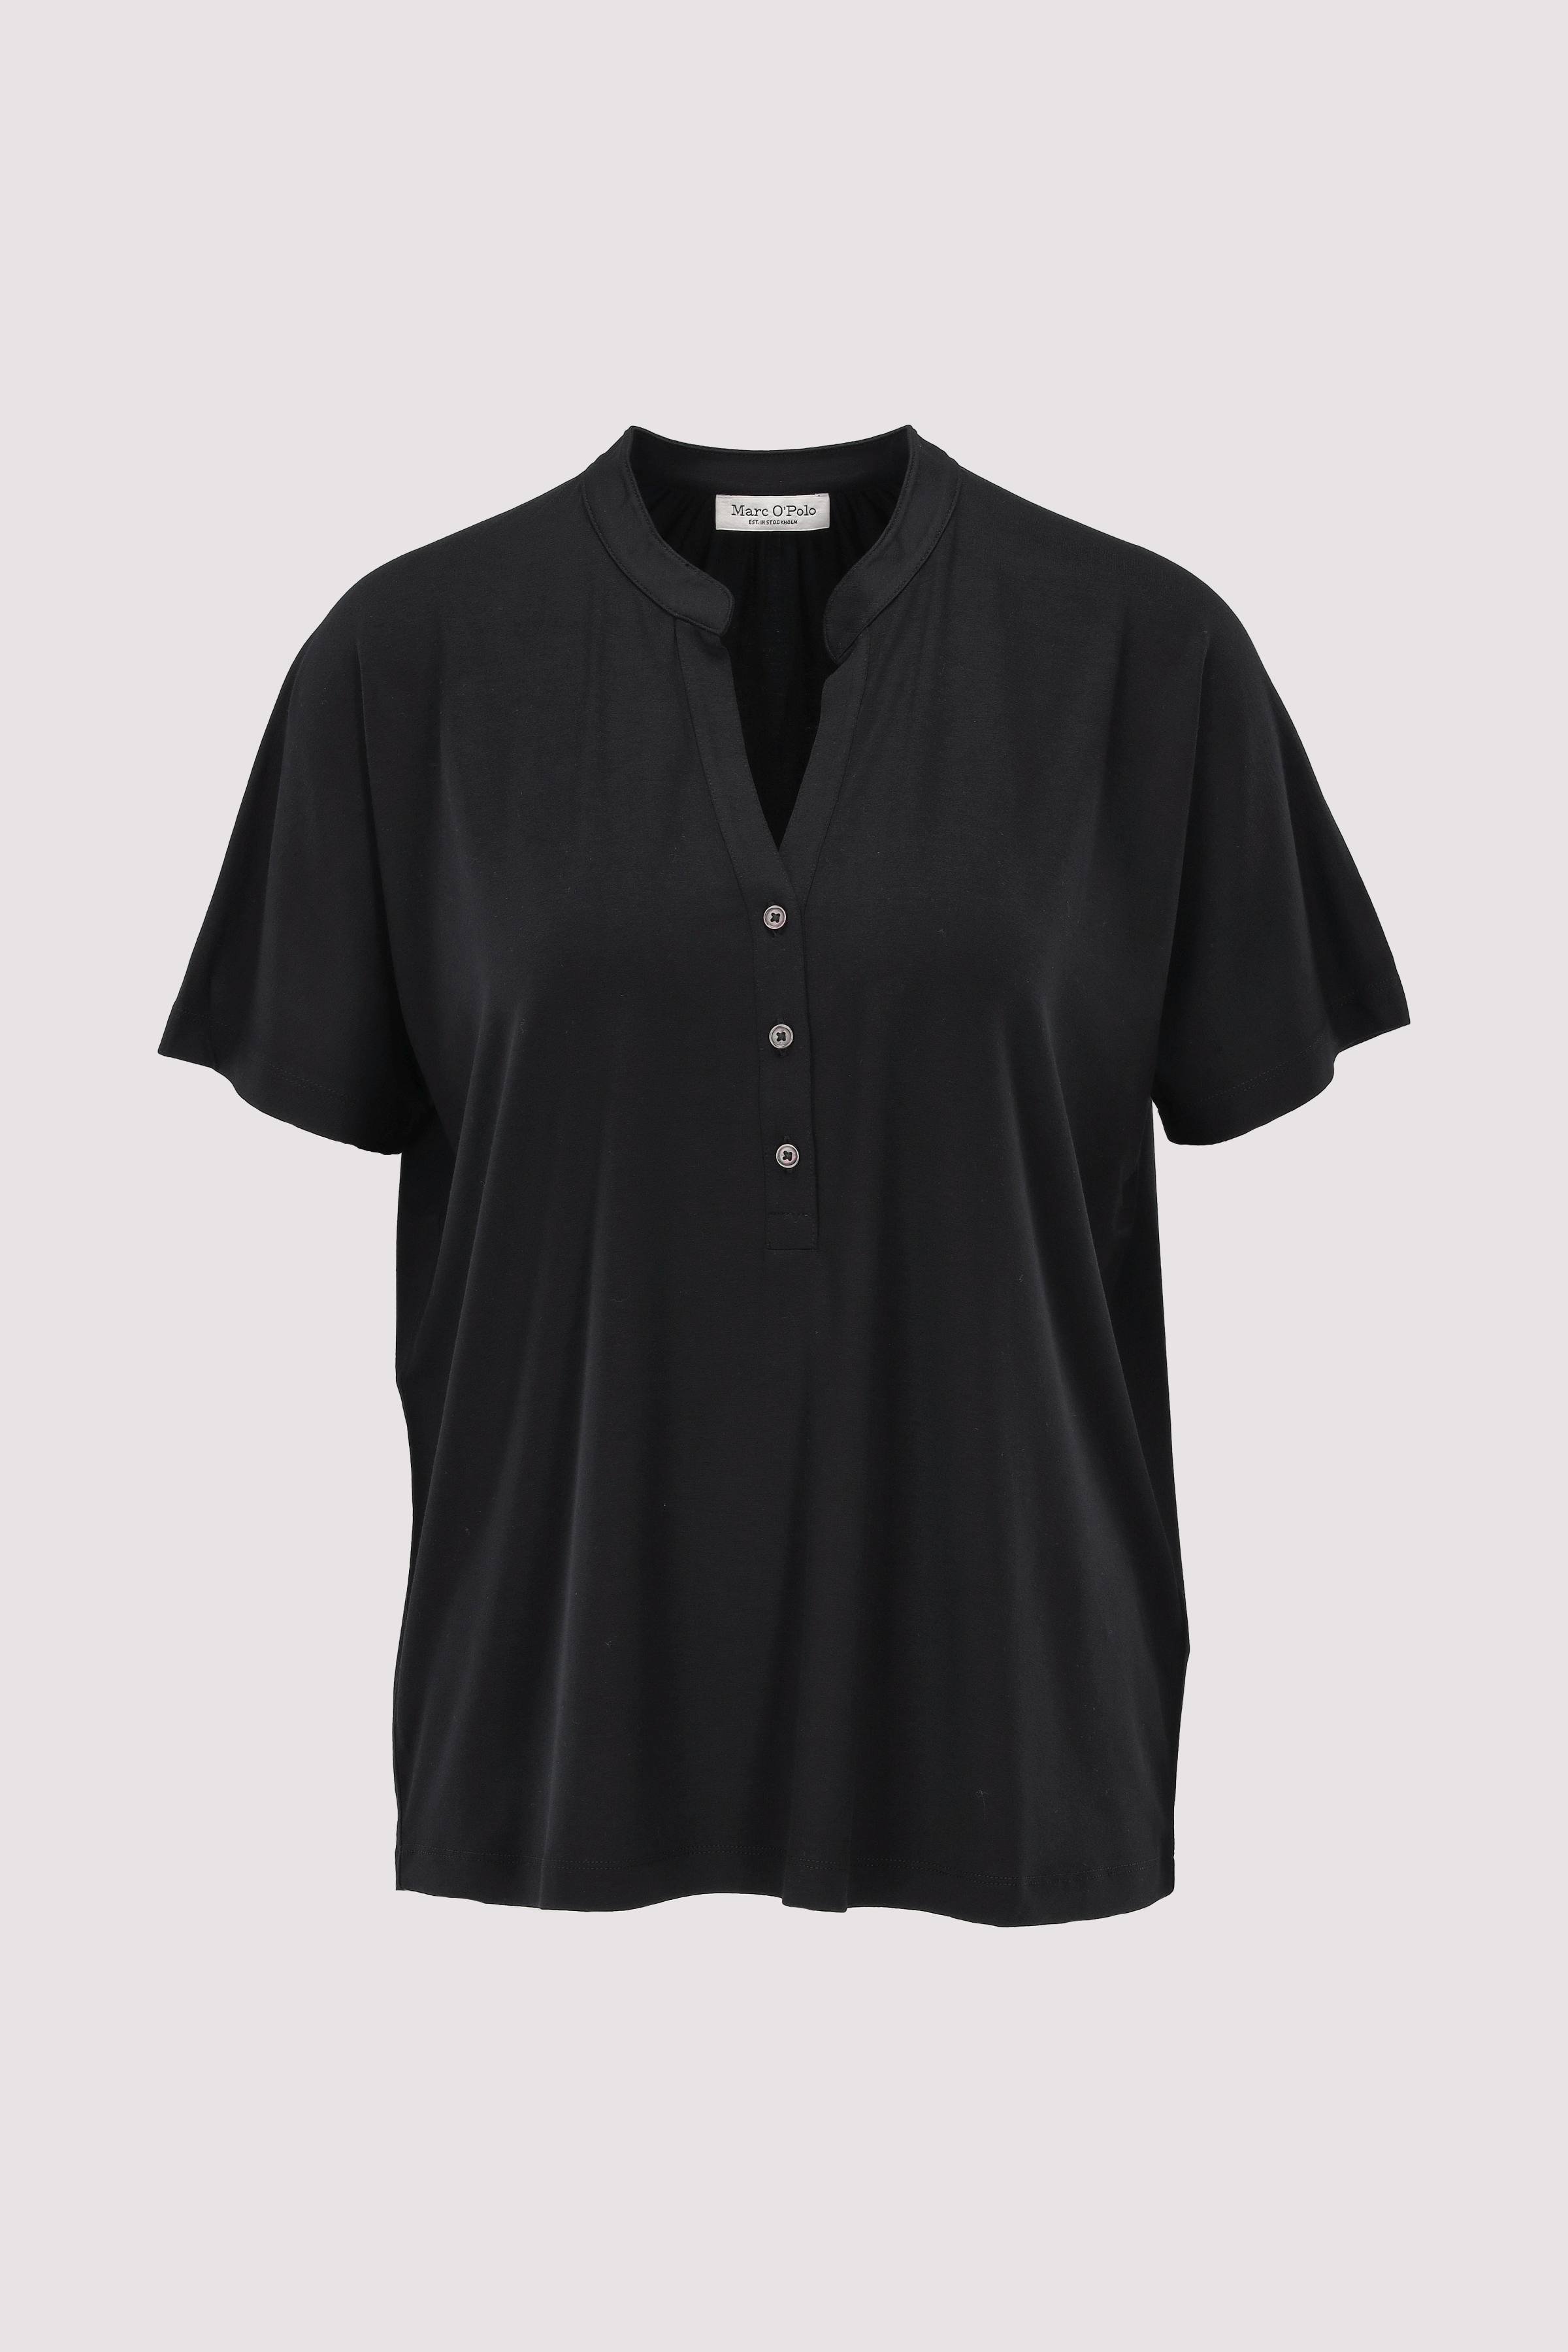 Jersey-blouse, short-sleeve, p